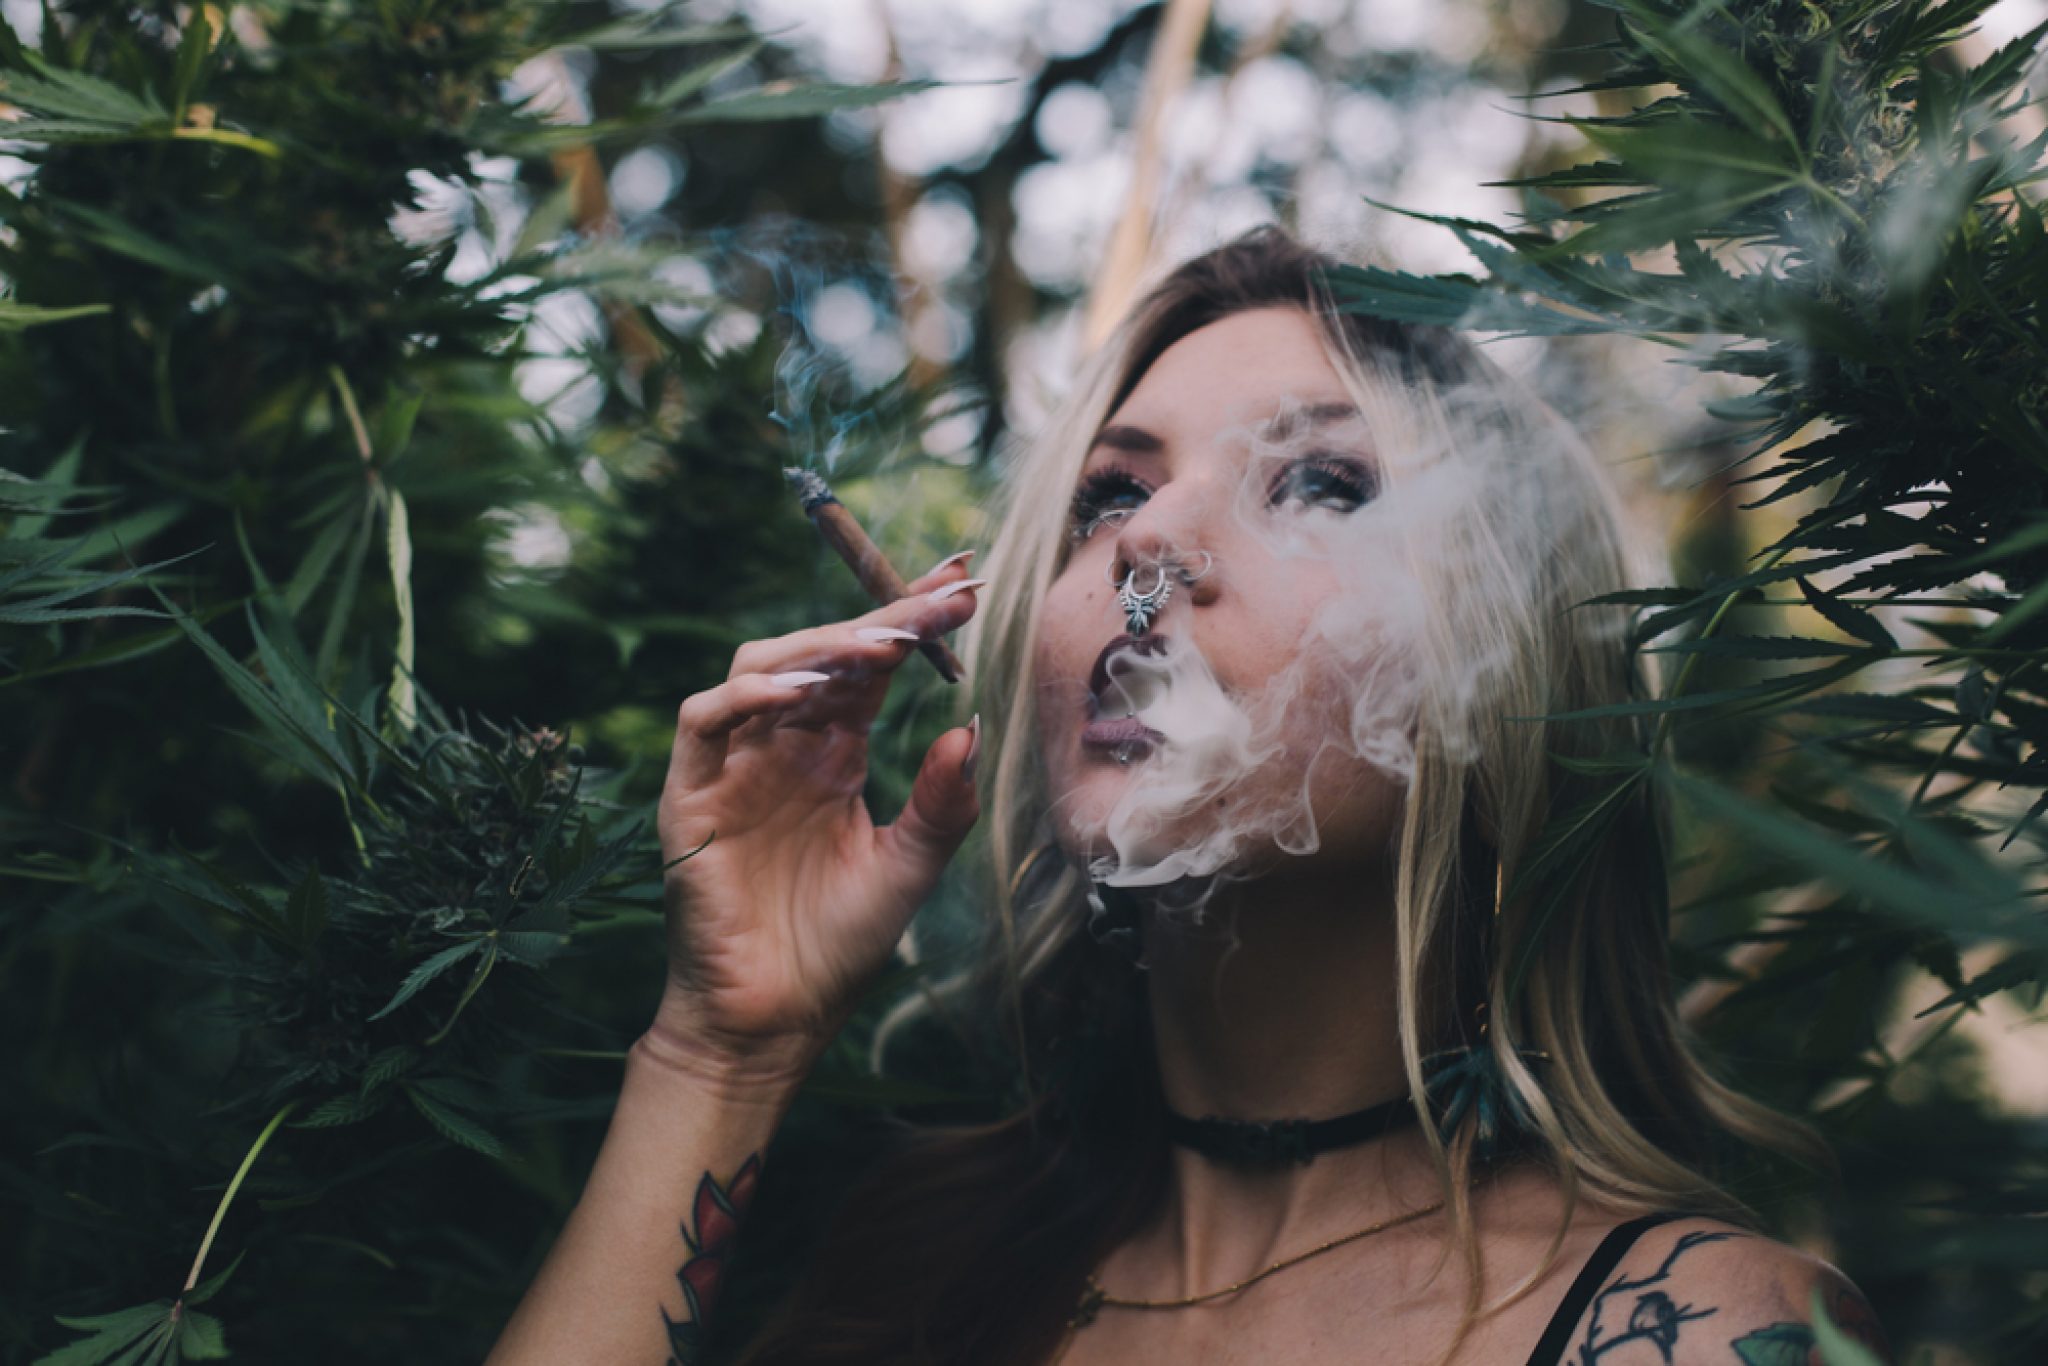 курящие марихуану девушки